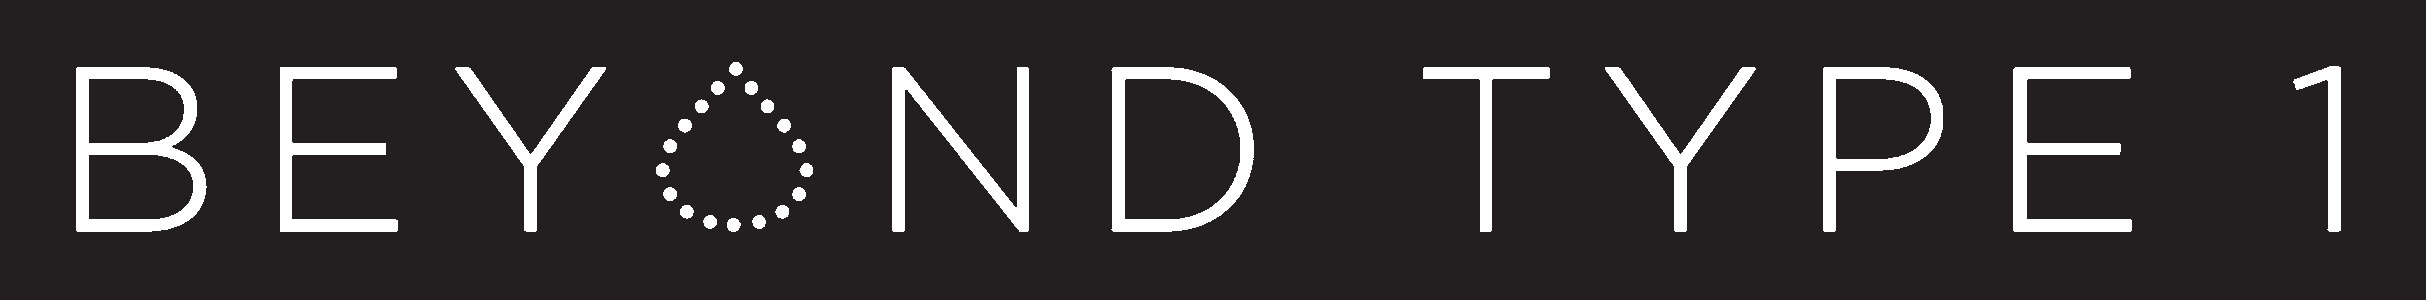 beyond type 1 diabetes logo